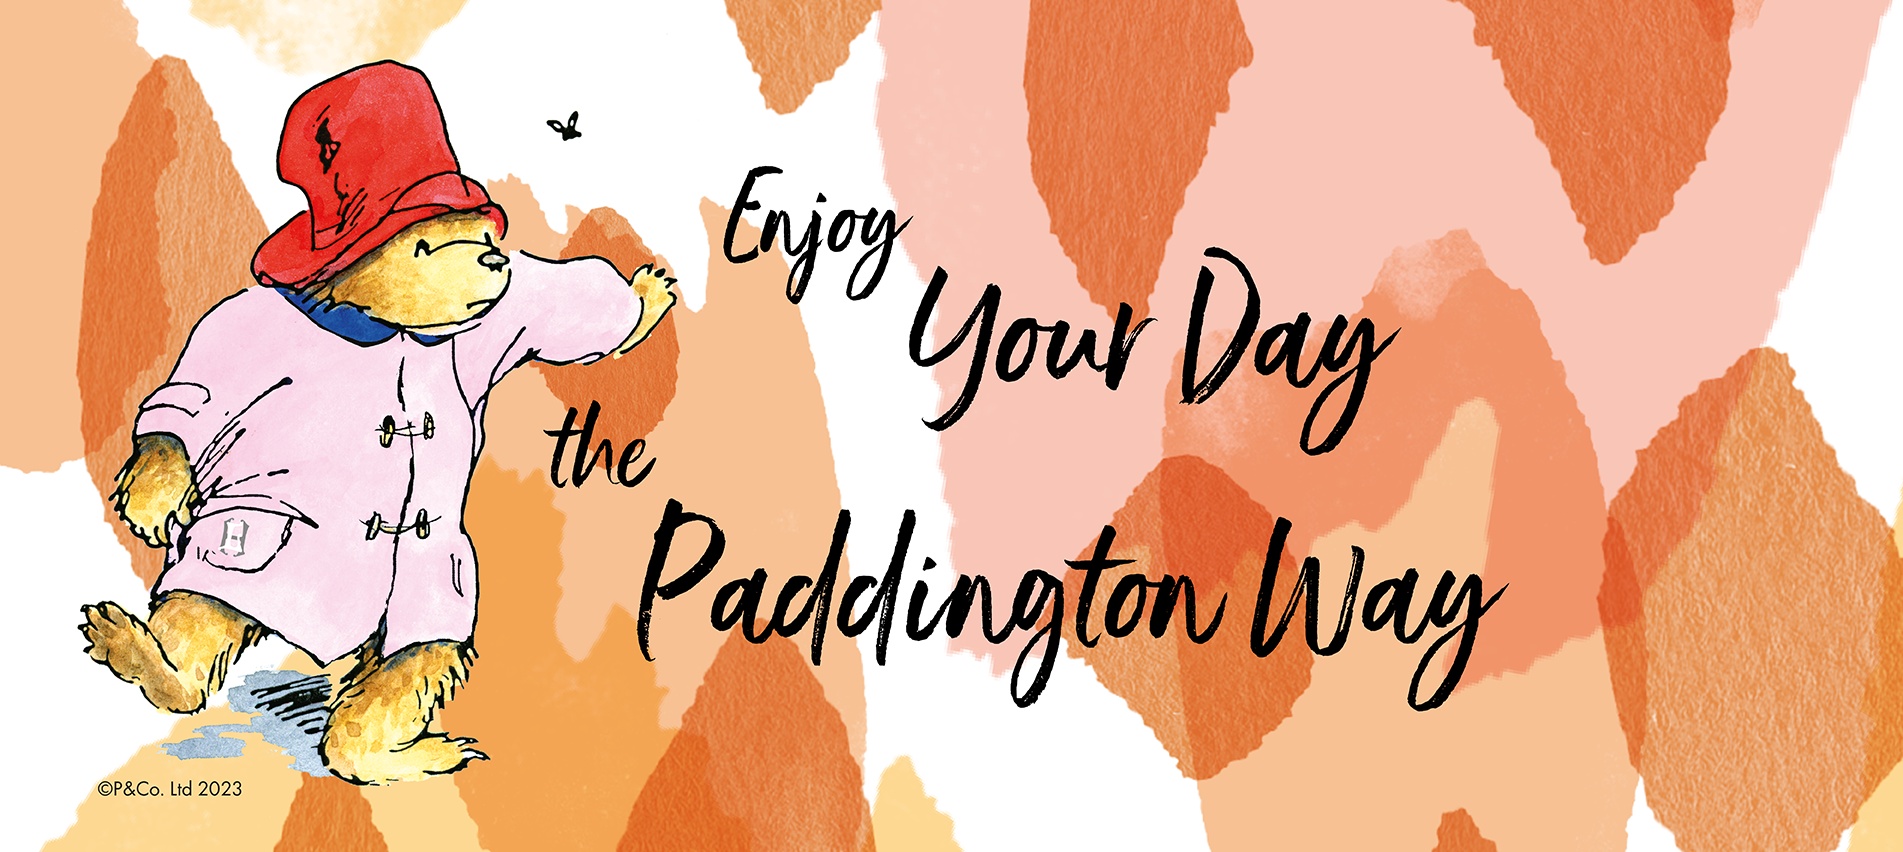 Enjoy Your Day the Paddington Way